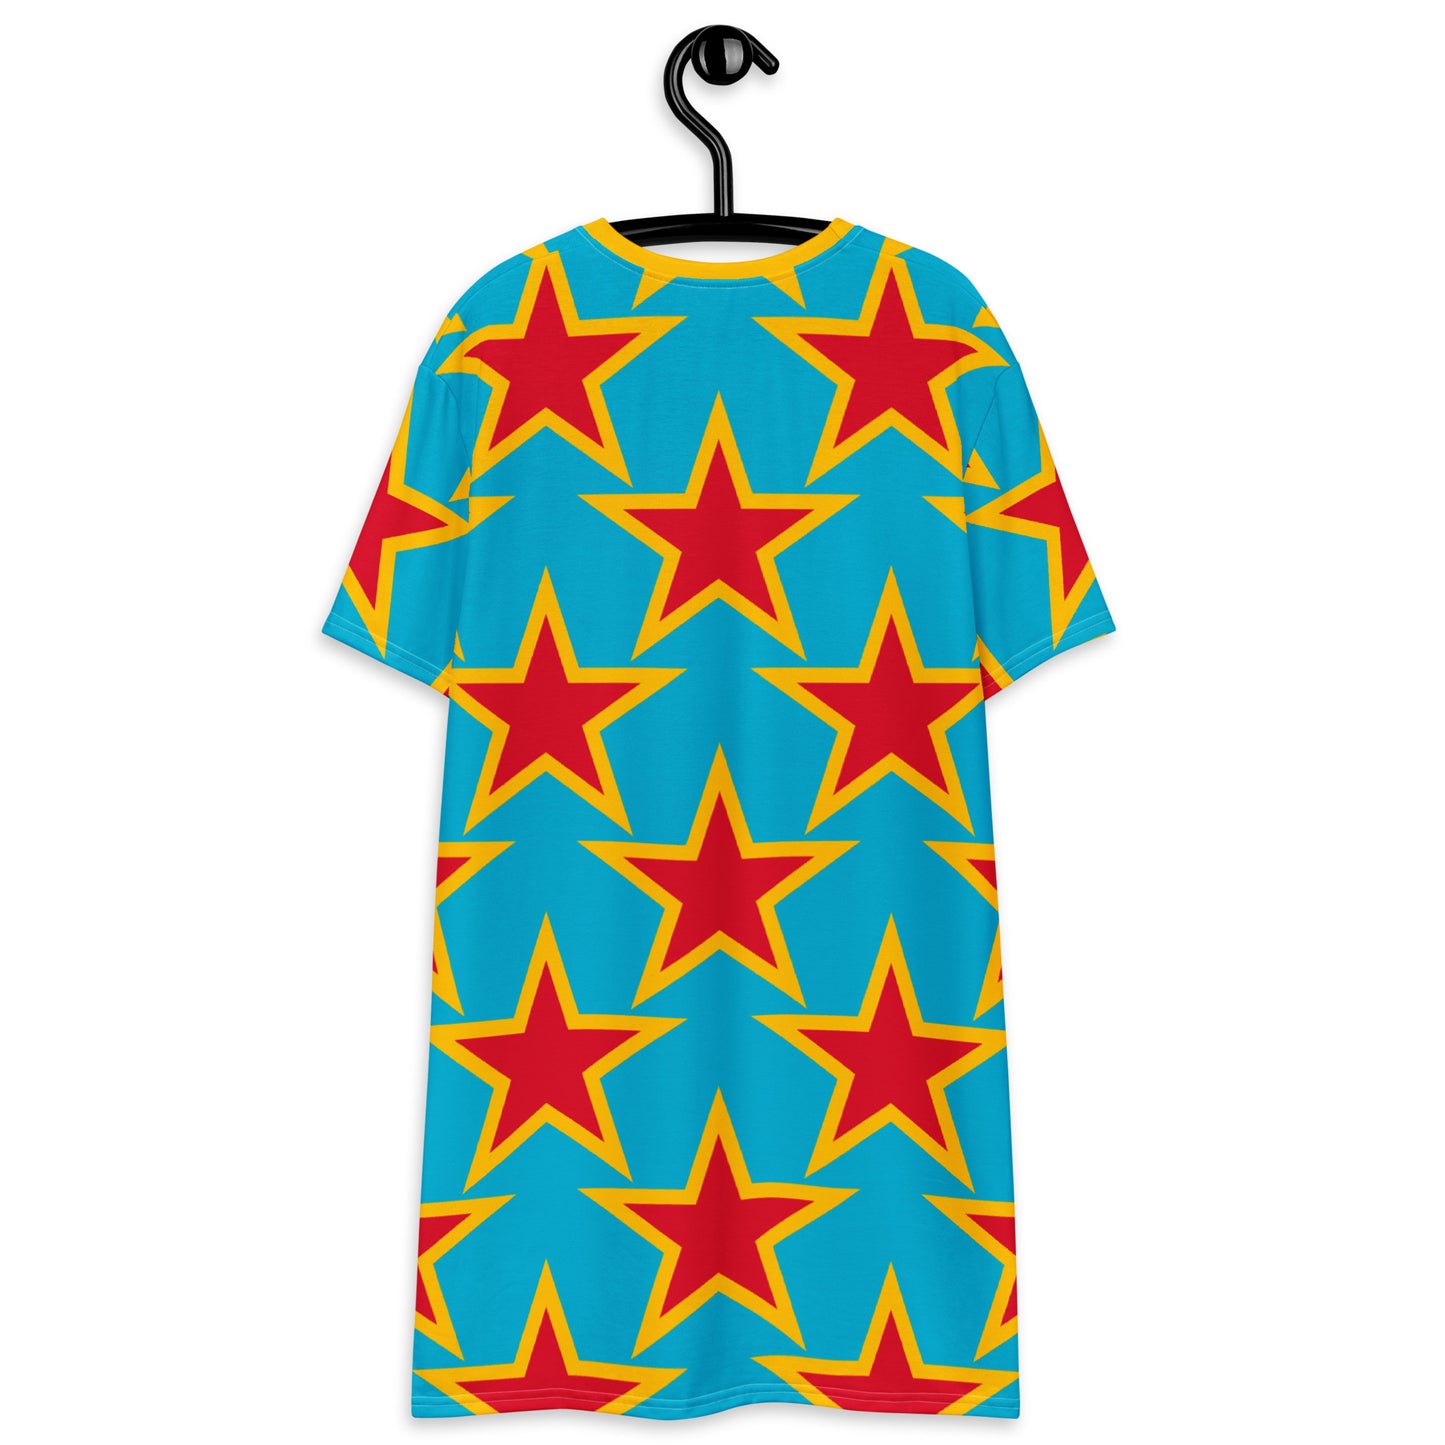 ELLIE STAR turquoise - T-shirt dress